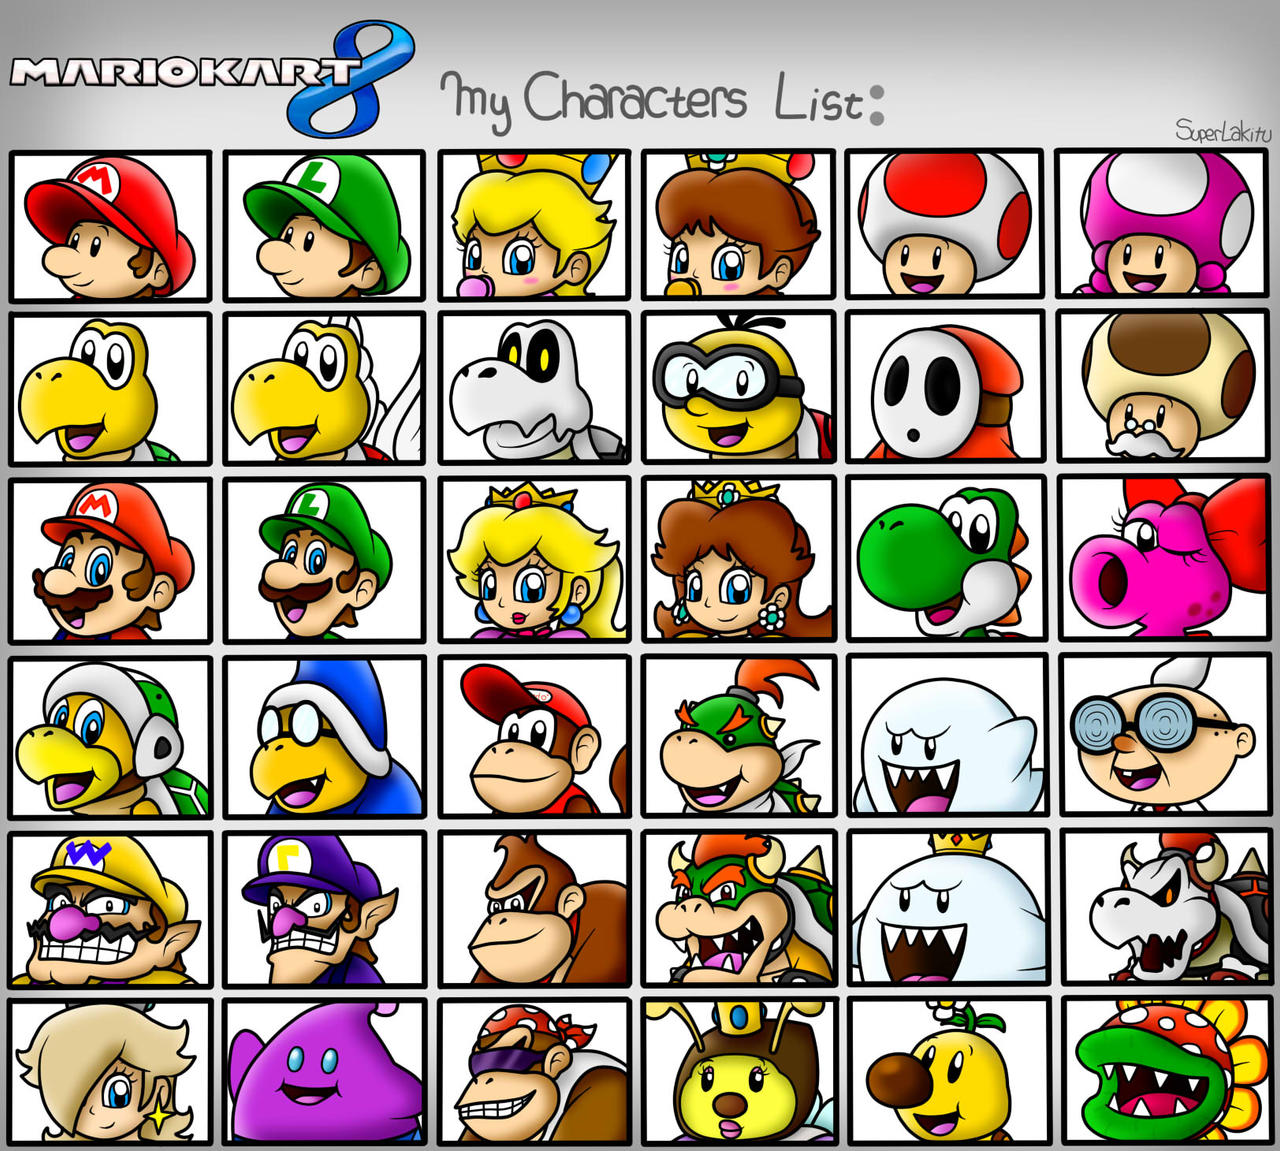 Mario Kart 8: My Characters List